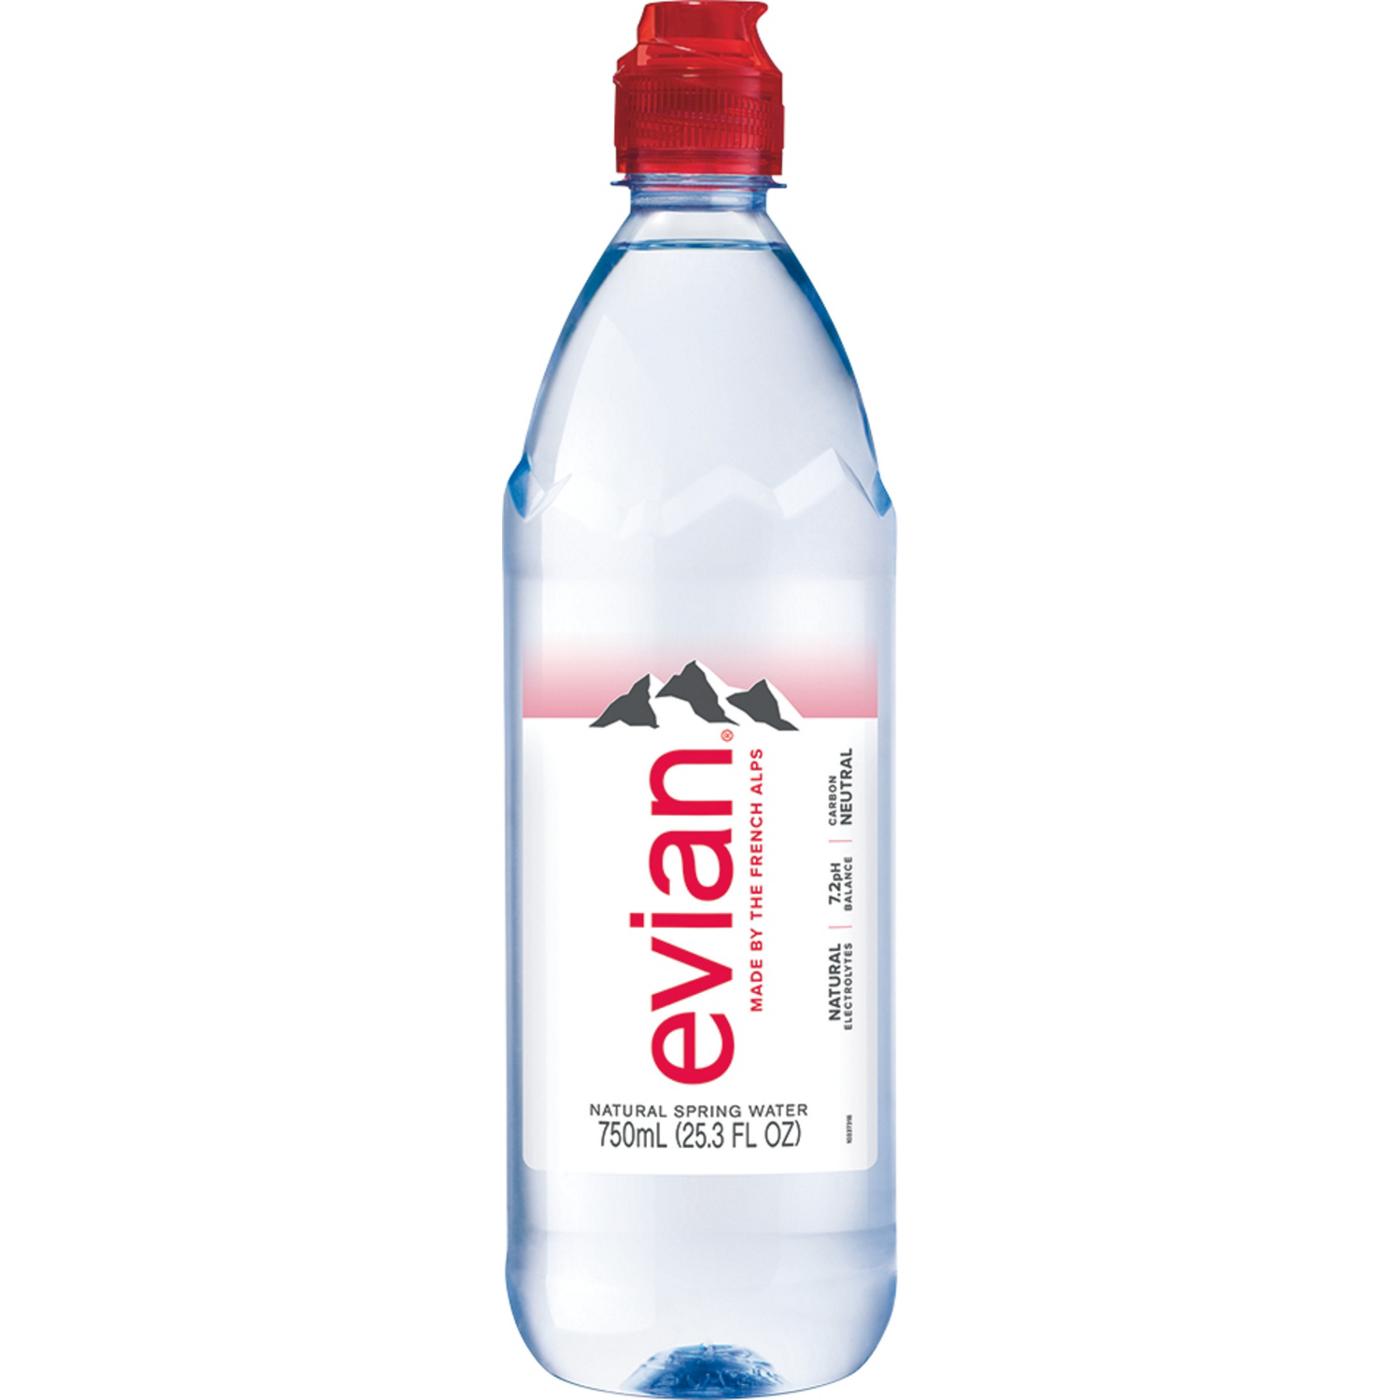 Evian Natural Spring Water; image 1 of 3